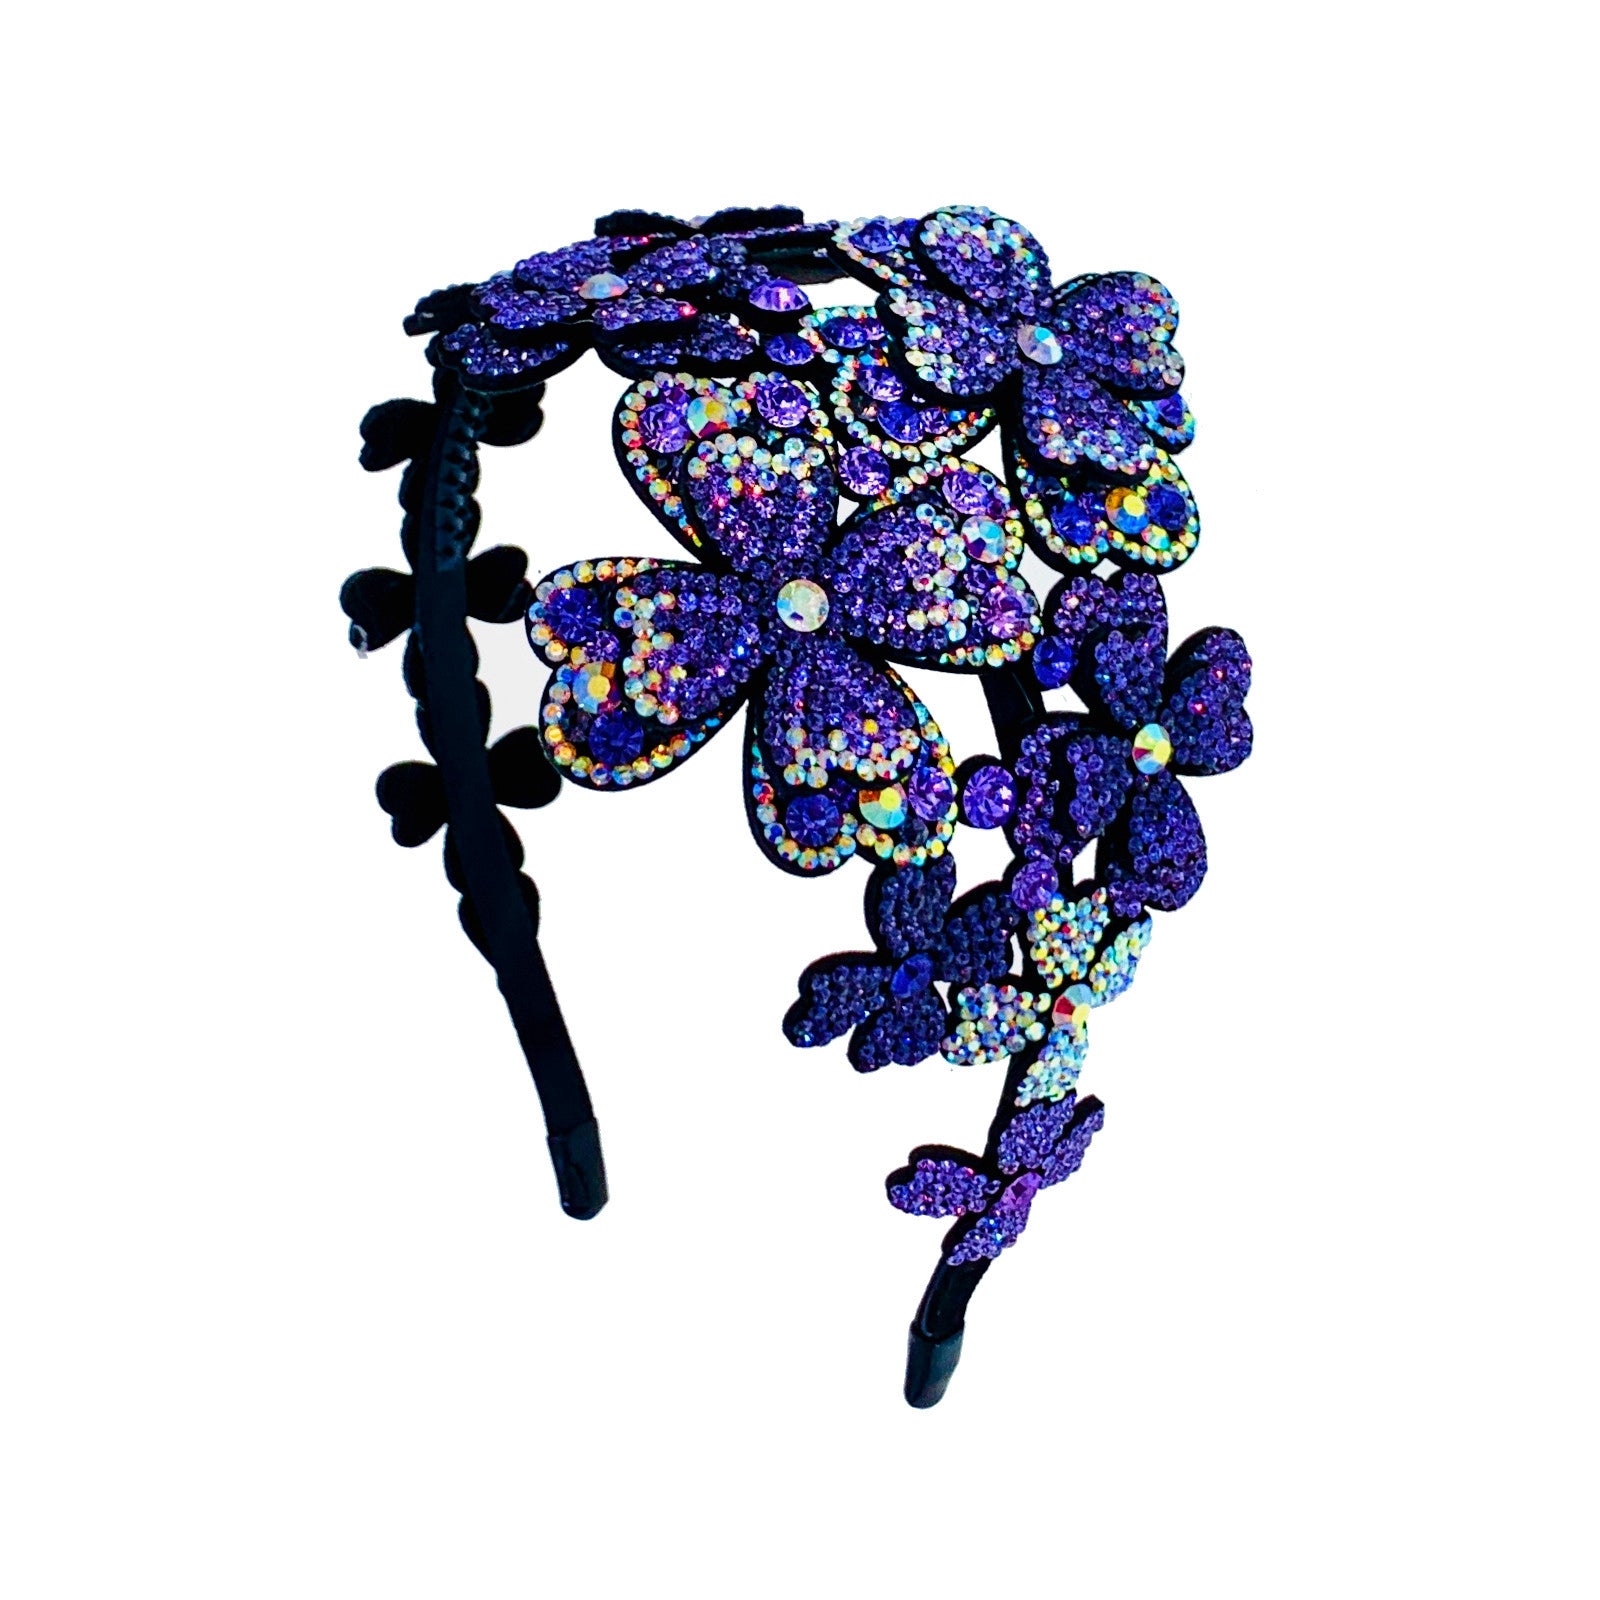 Zoé Flowers Handmade Faux Leather Base with Swarovski Elementary Crystals Headband Hairband Hot Pink Silver Grey Nave Blue Rainbow AB, Headband - MOGHANT